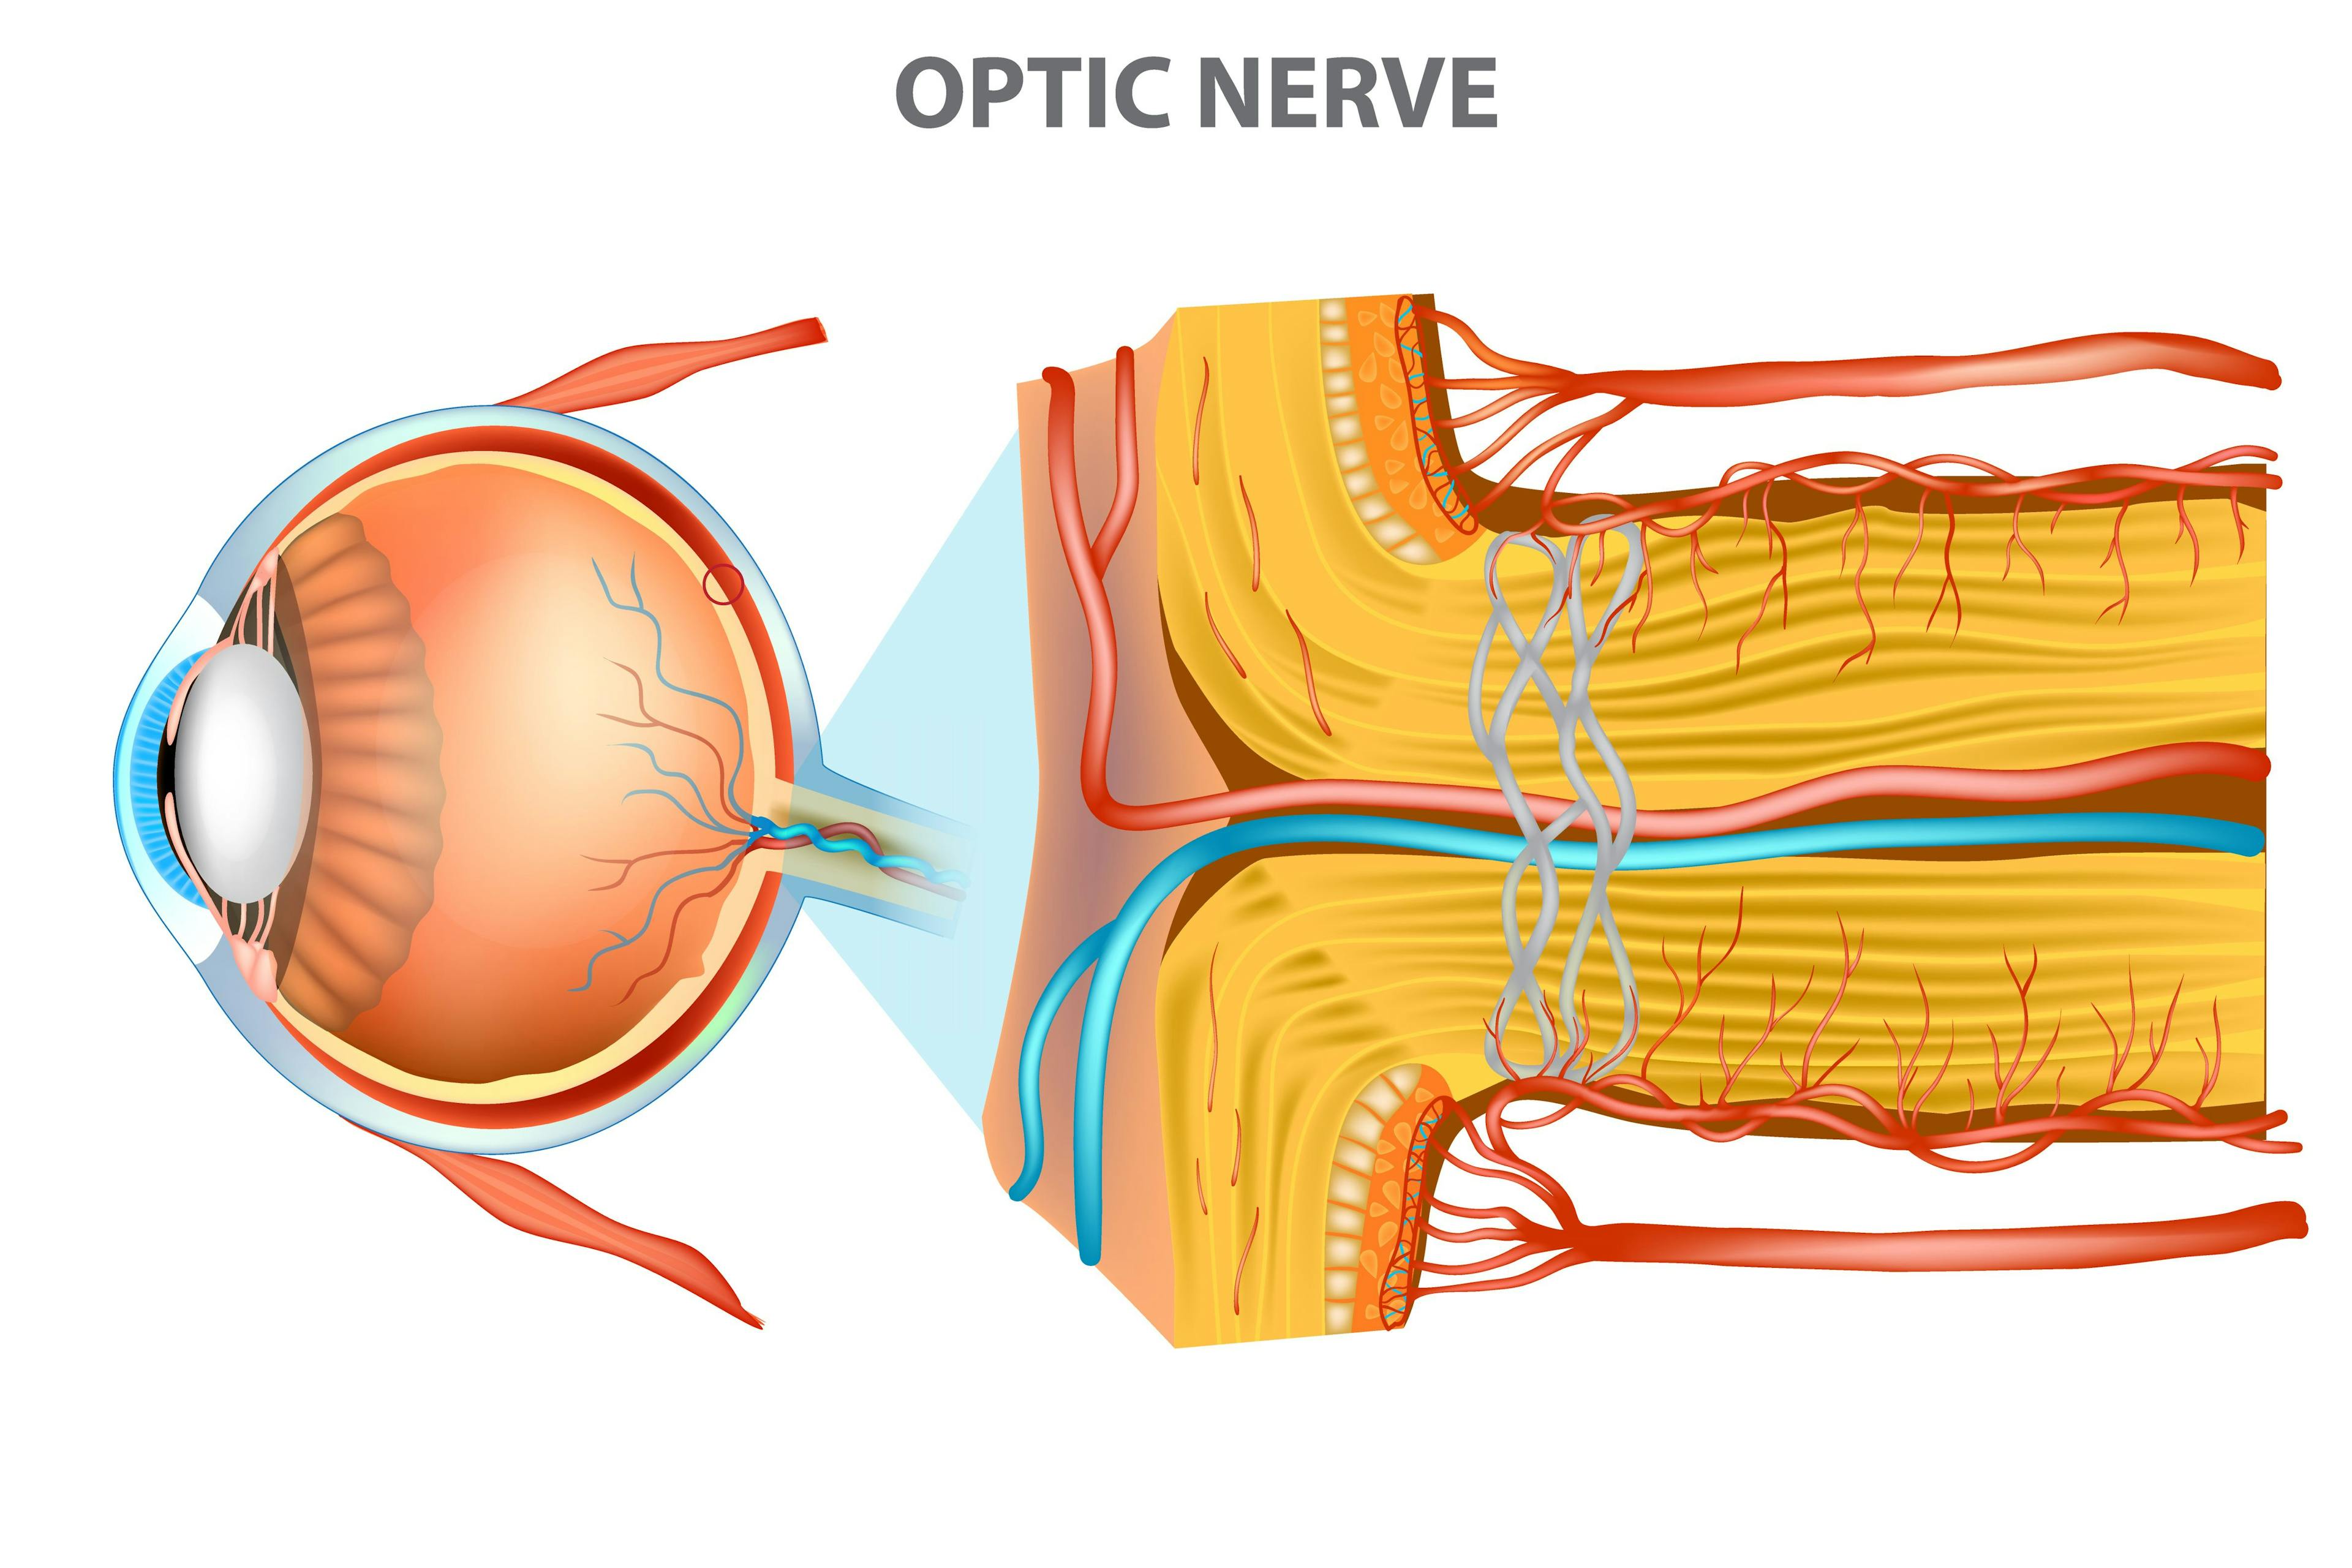 medical illustration of optic nerve | Image credit: ©sakurra adobe.stock.com